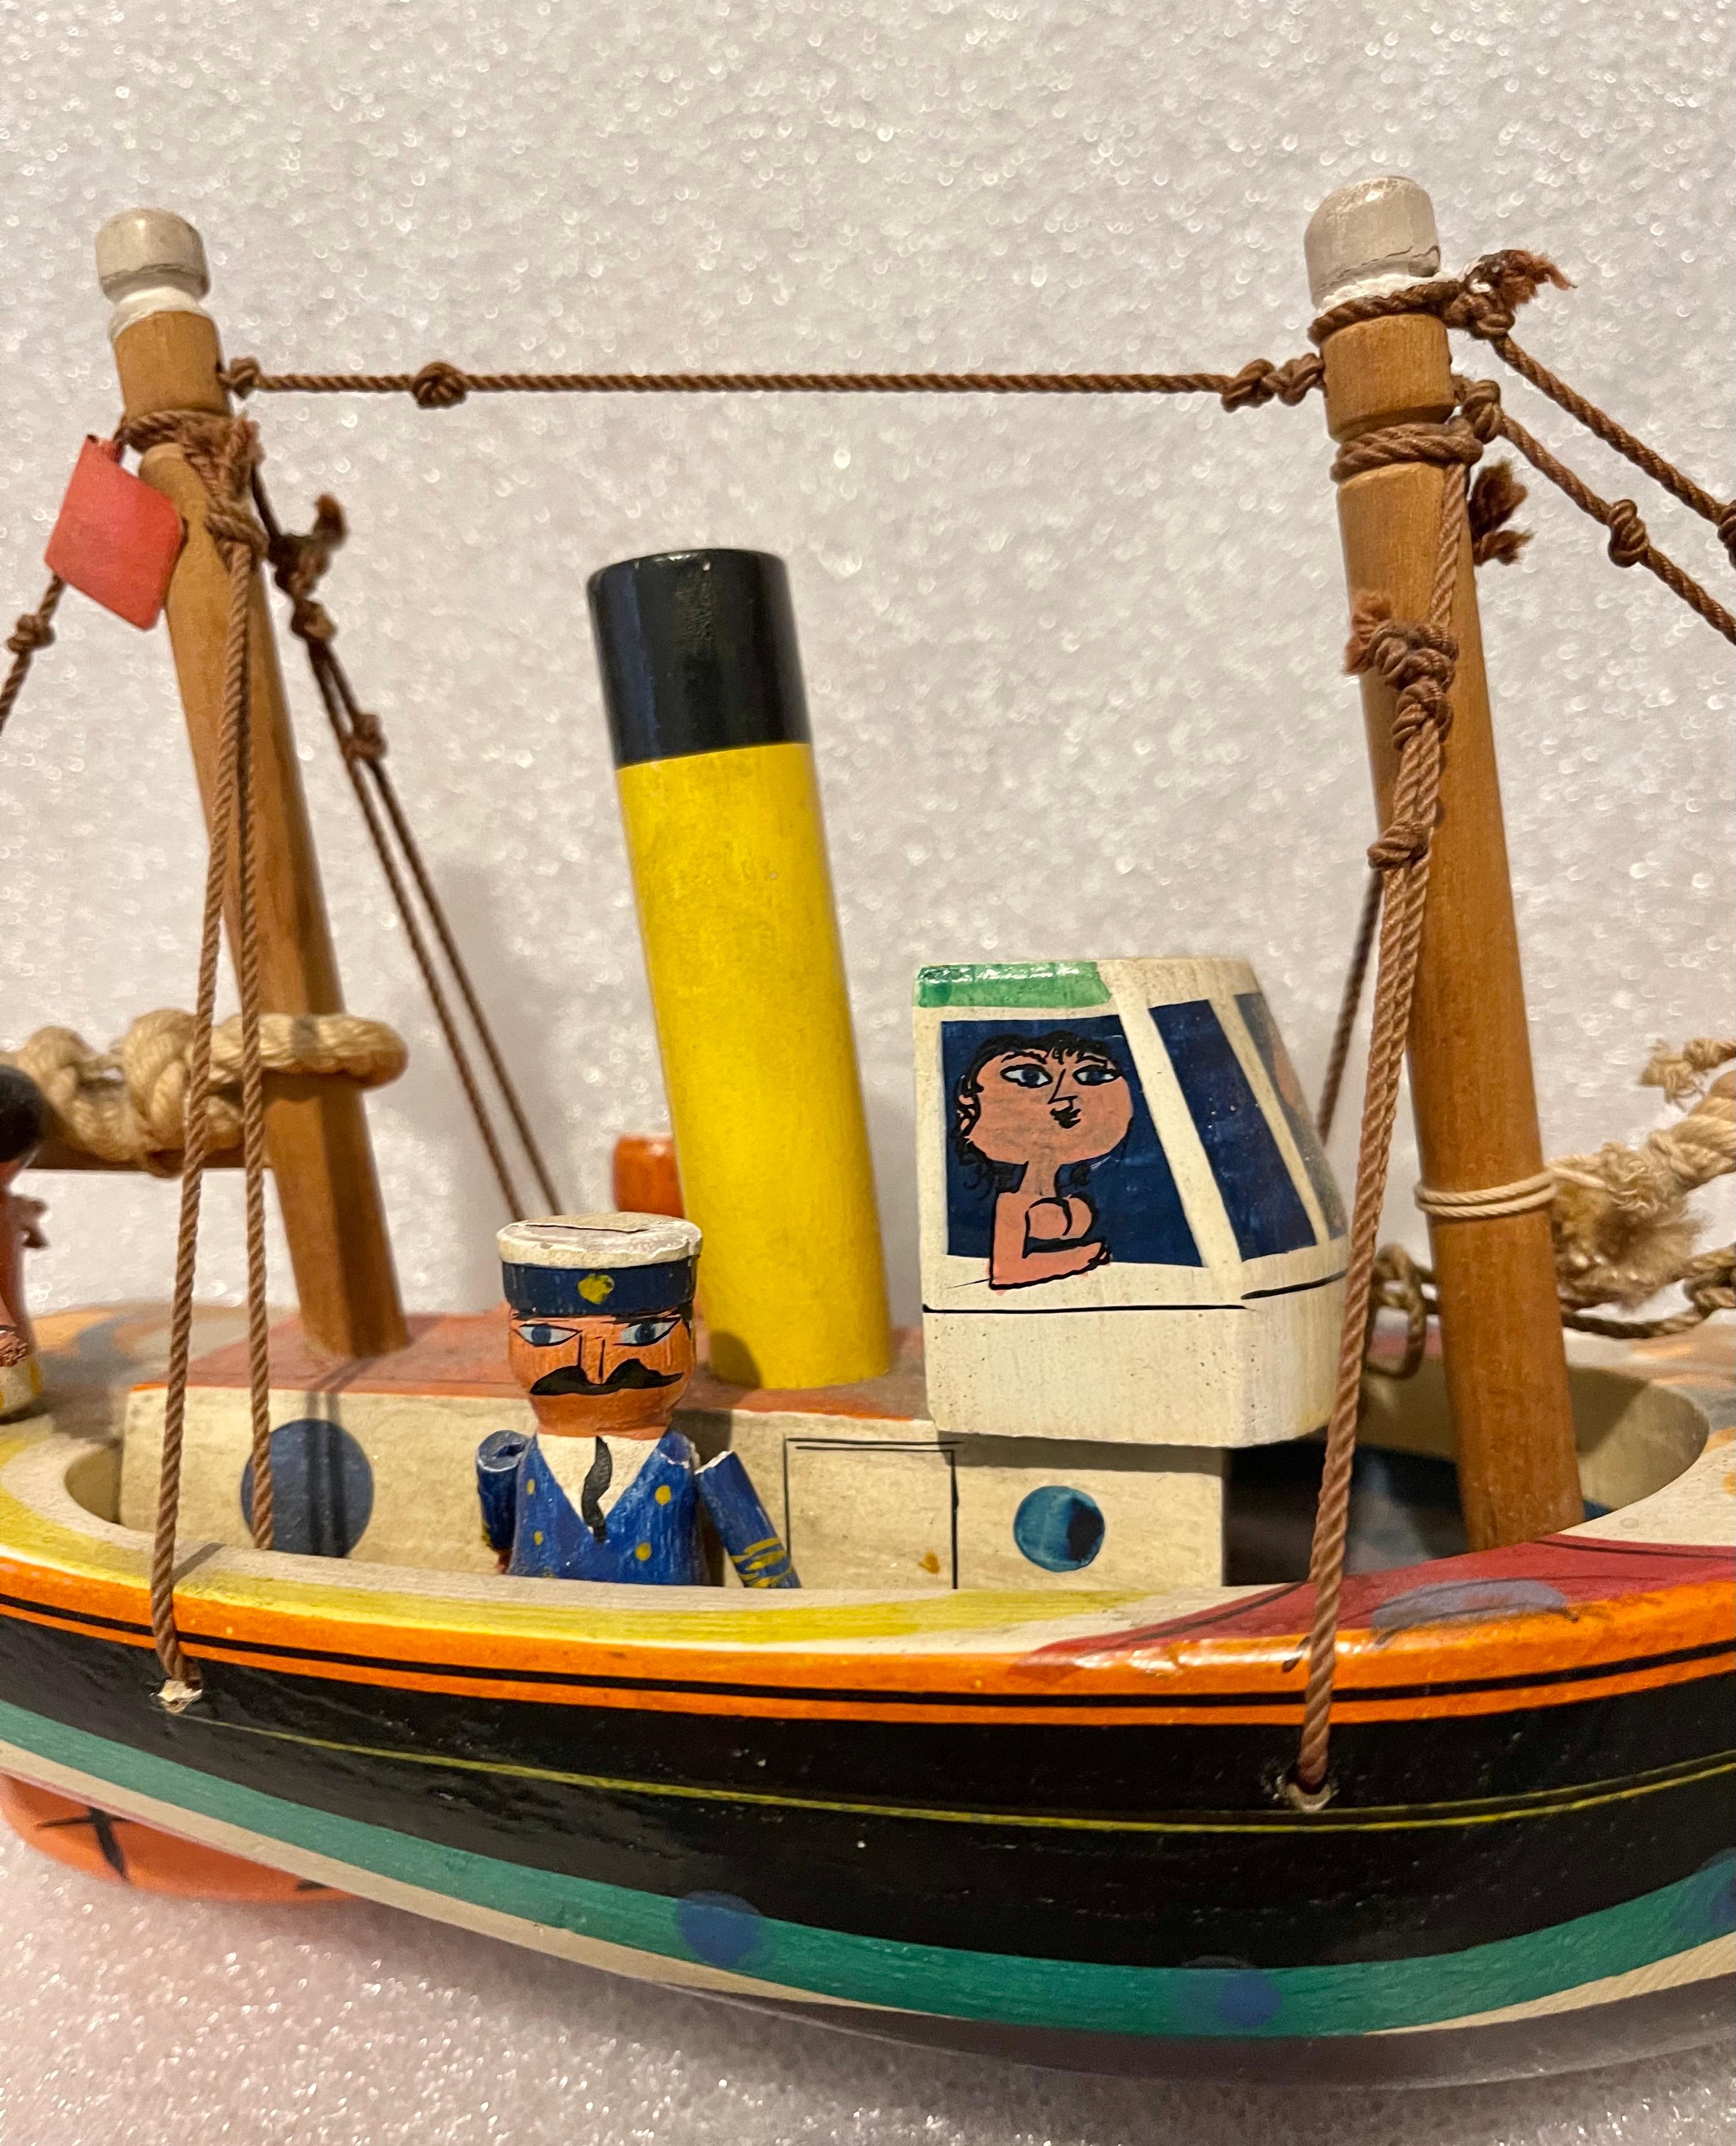 British Folk Art Whimsical Enamel Painted Carved Wood Model Ship Toy Sculpture 6